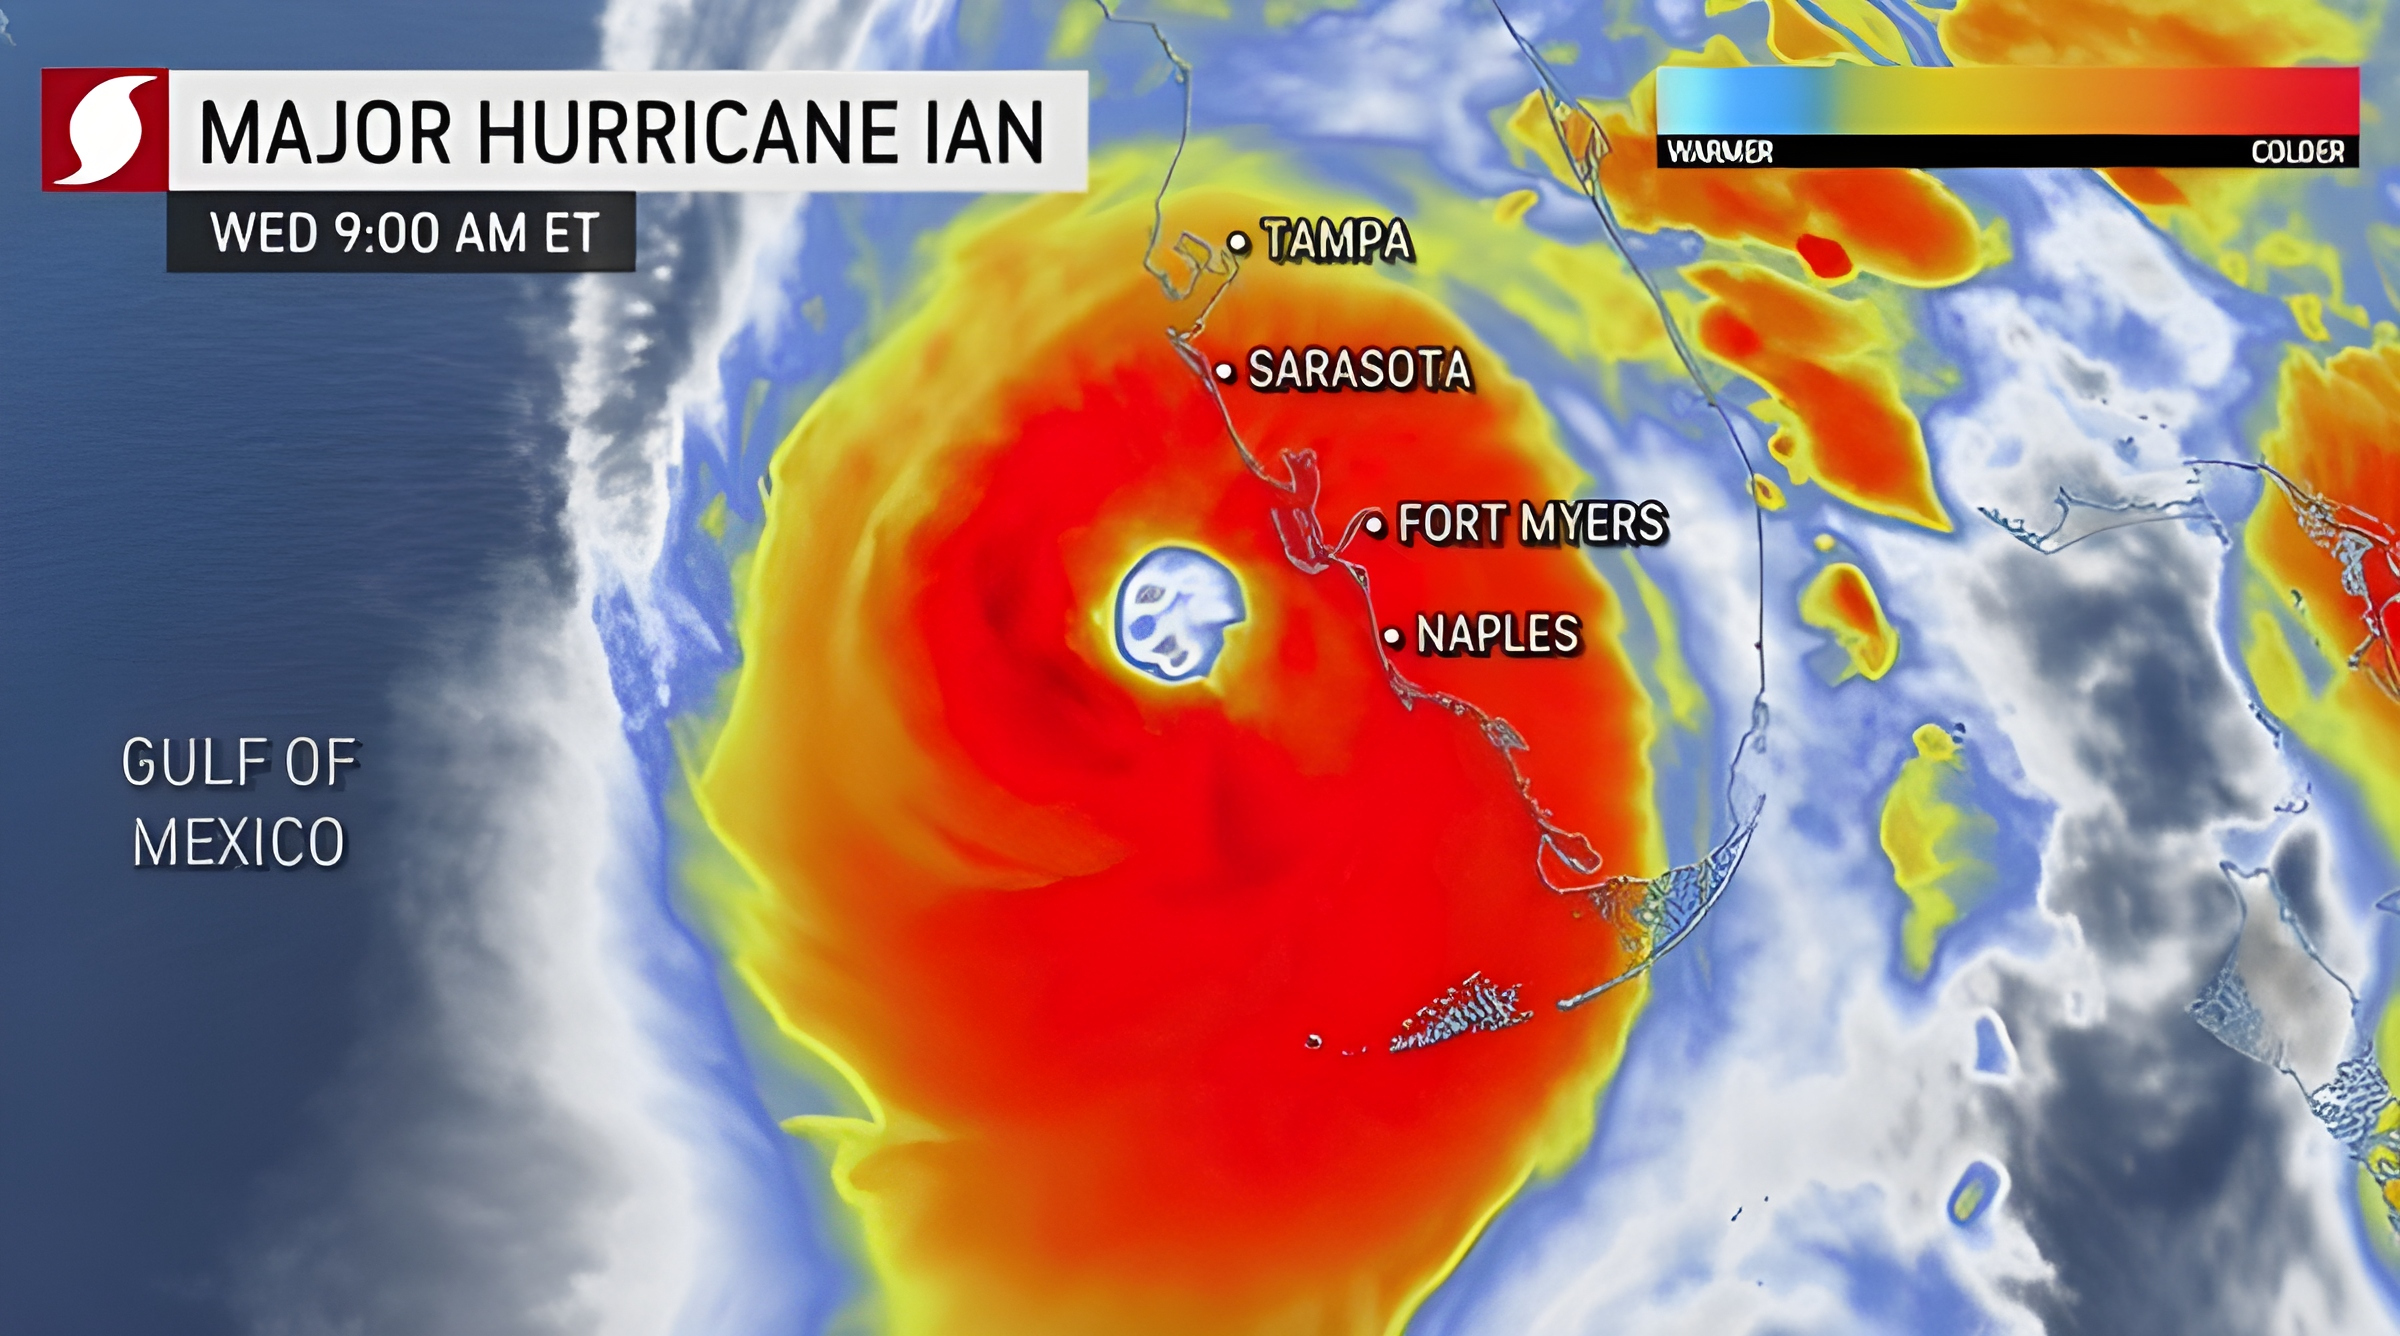 Historic Devastation by Hurricane Ian in Florida